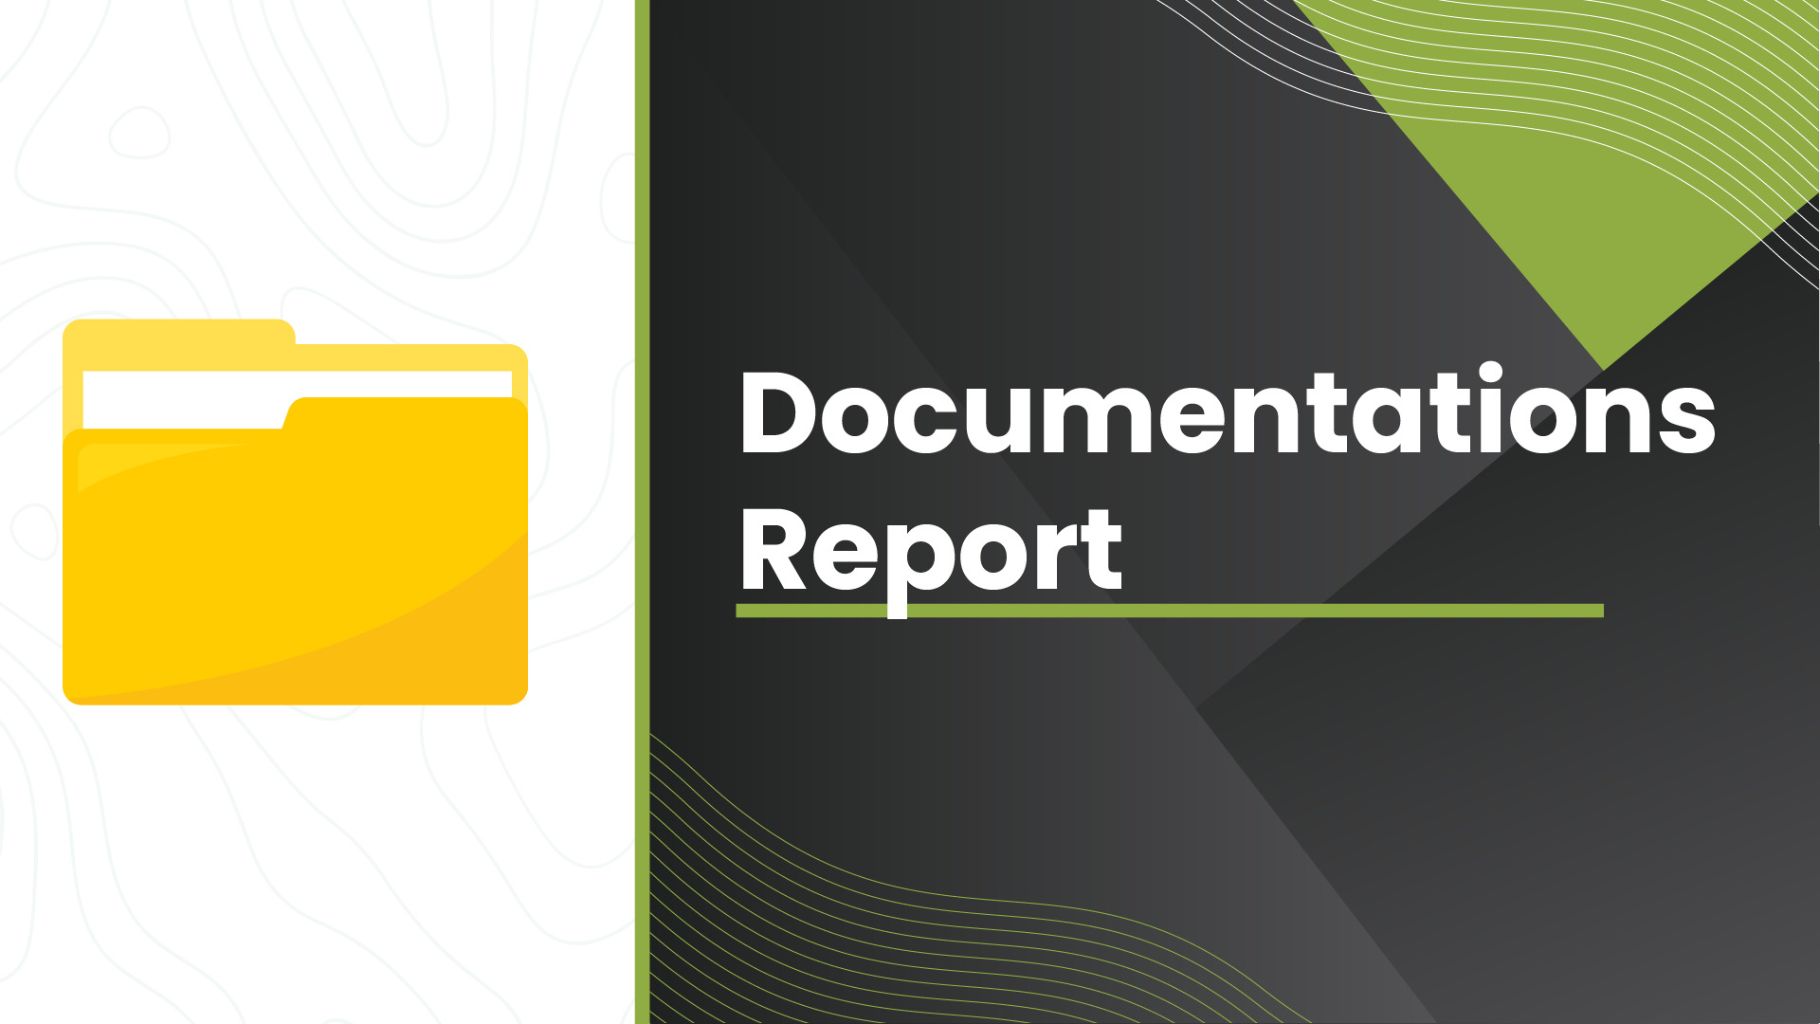 Documentations Report